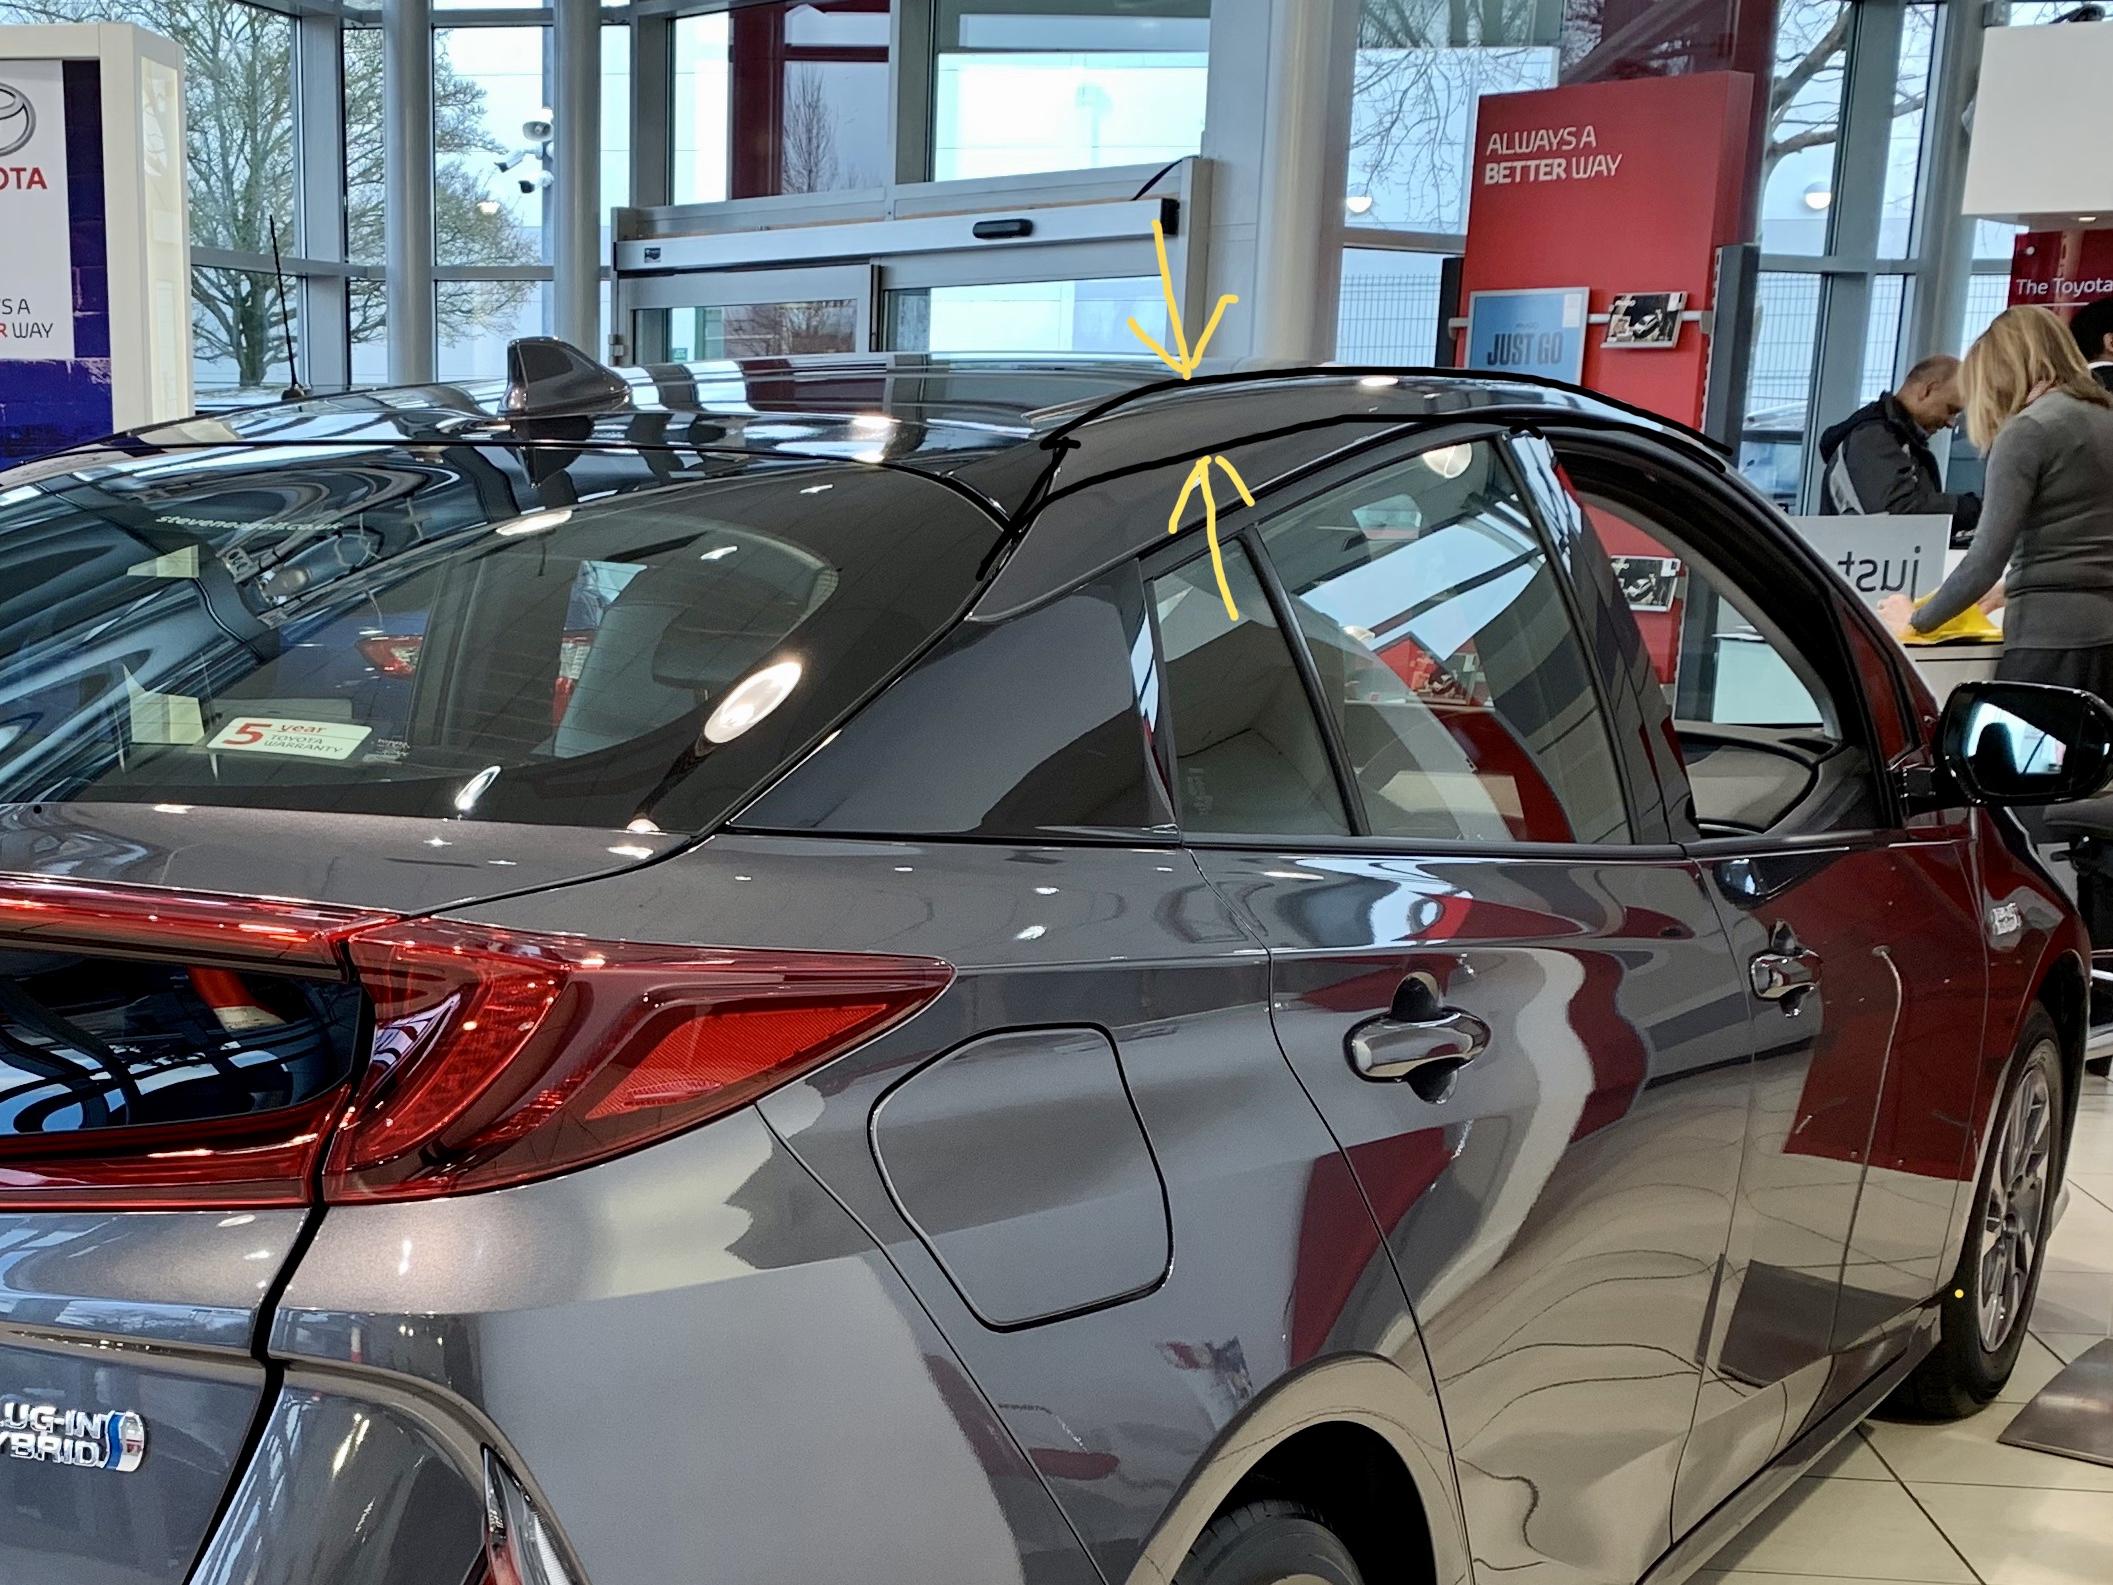 Toyota Auris Hybrid (2013-2019) interior & comfort